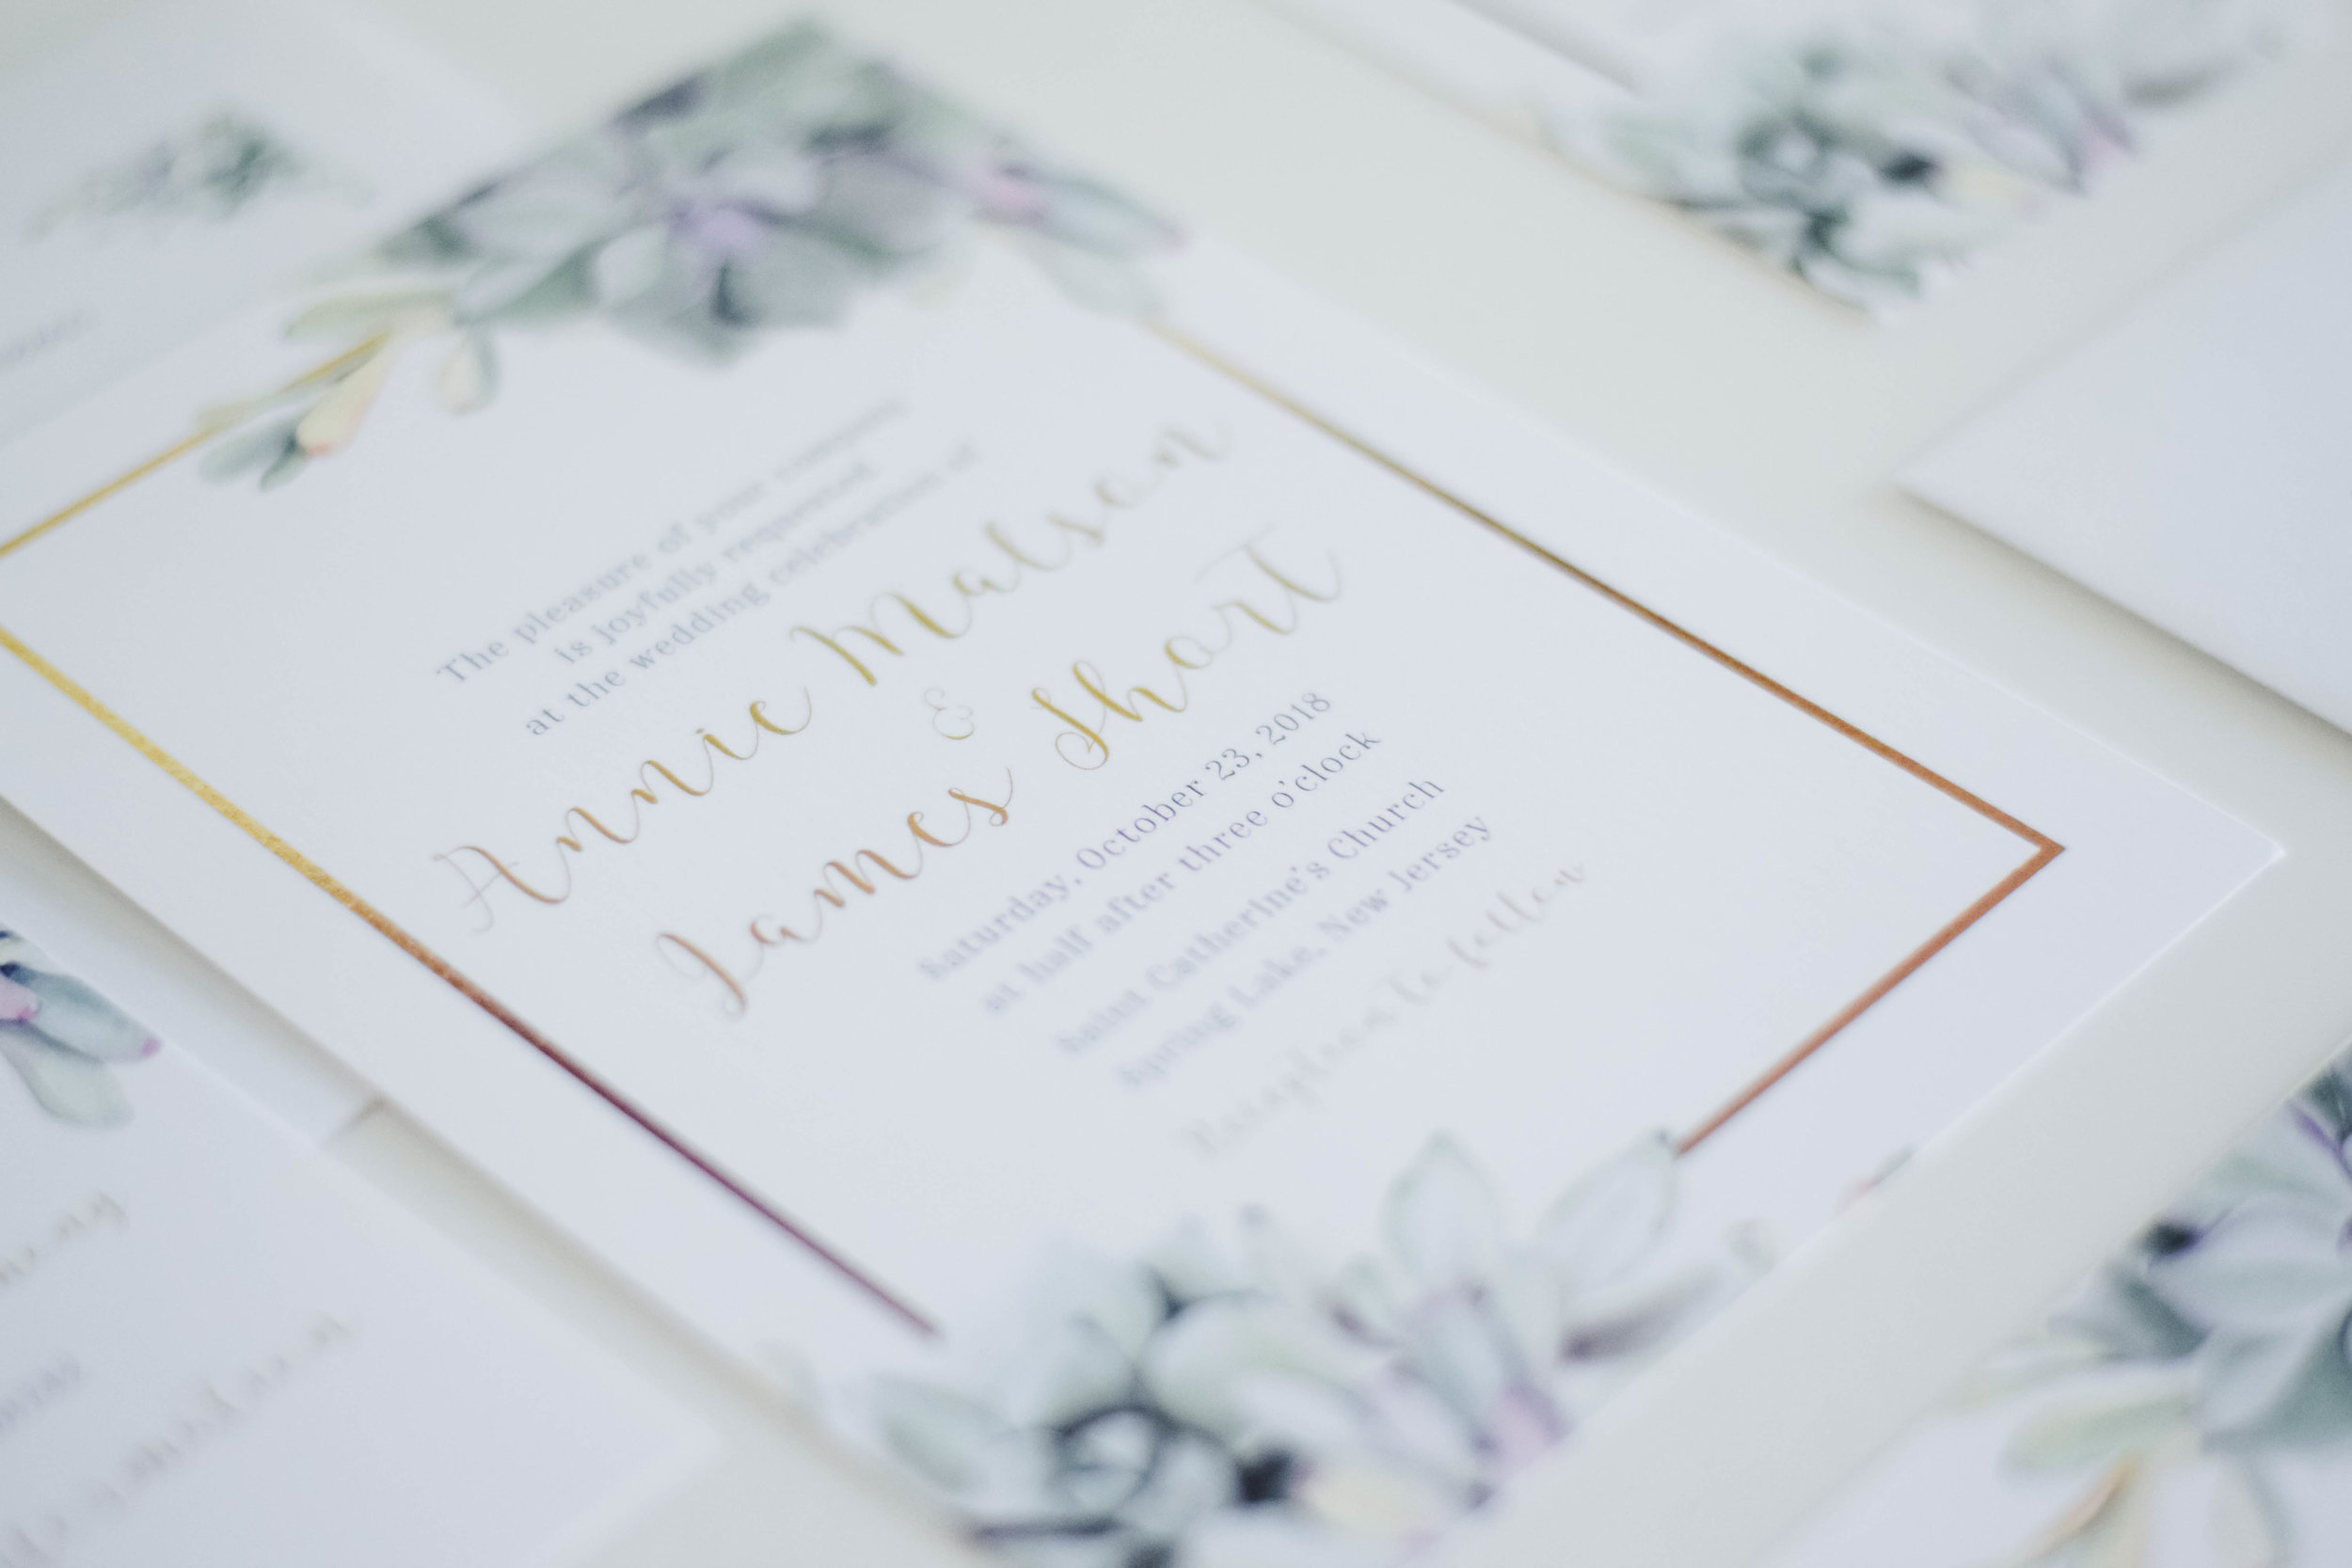 The Bridal Boutique | Succulent Wedding Invitation Suite - Jade Forest Design